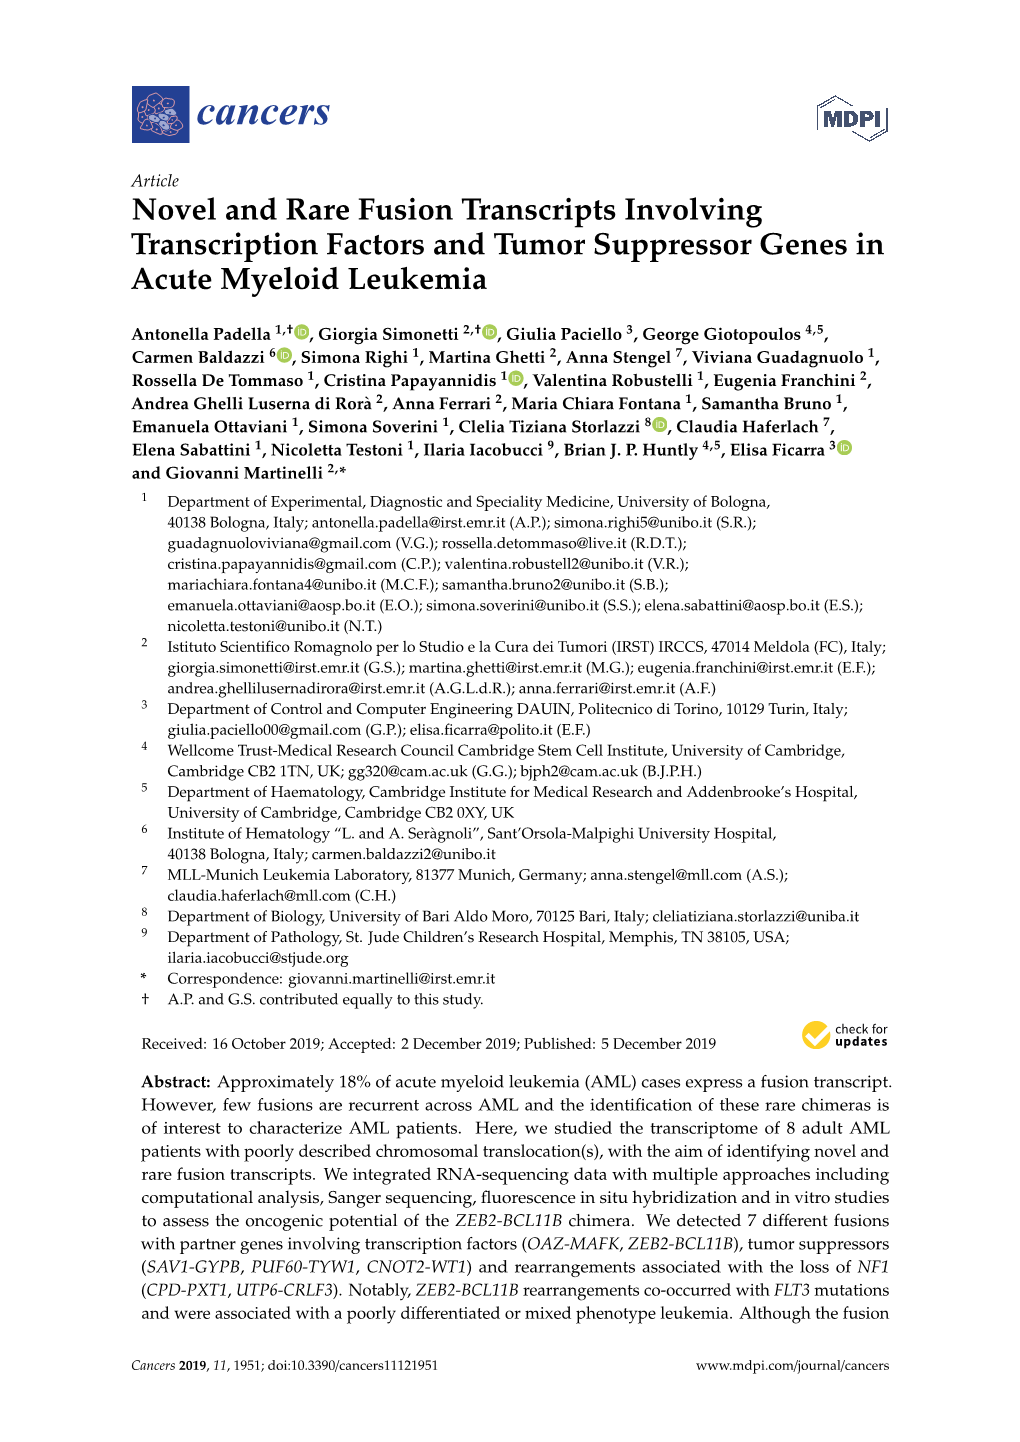 Novel and Rare Fusion Transcripts Involving Transcription Factors and Tumor Suppressor Genes in Acute Myeloid Leukemia